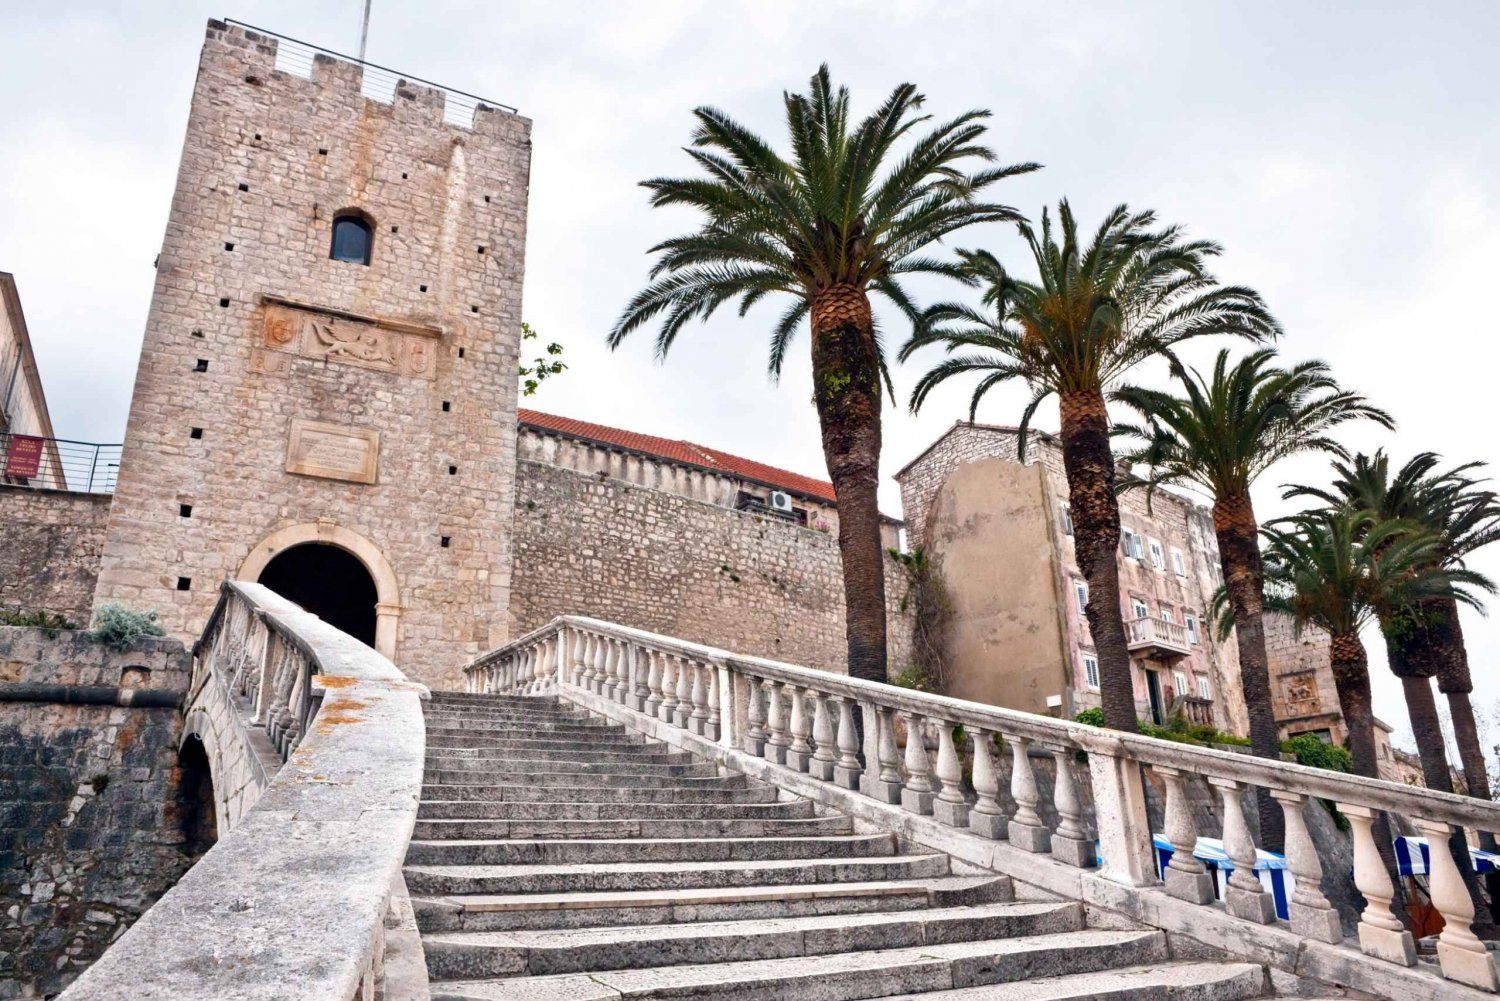 From Dubrovnik: Guided Tour of Pelješac & Korčula